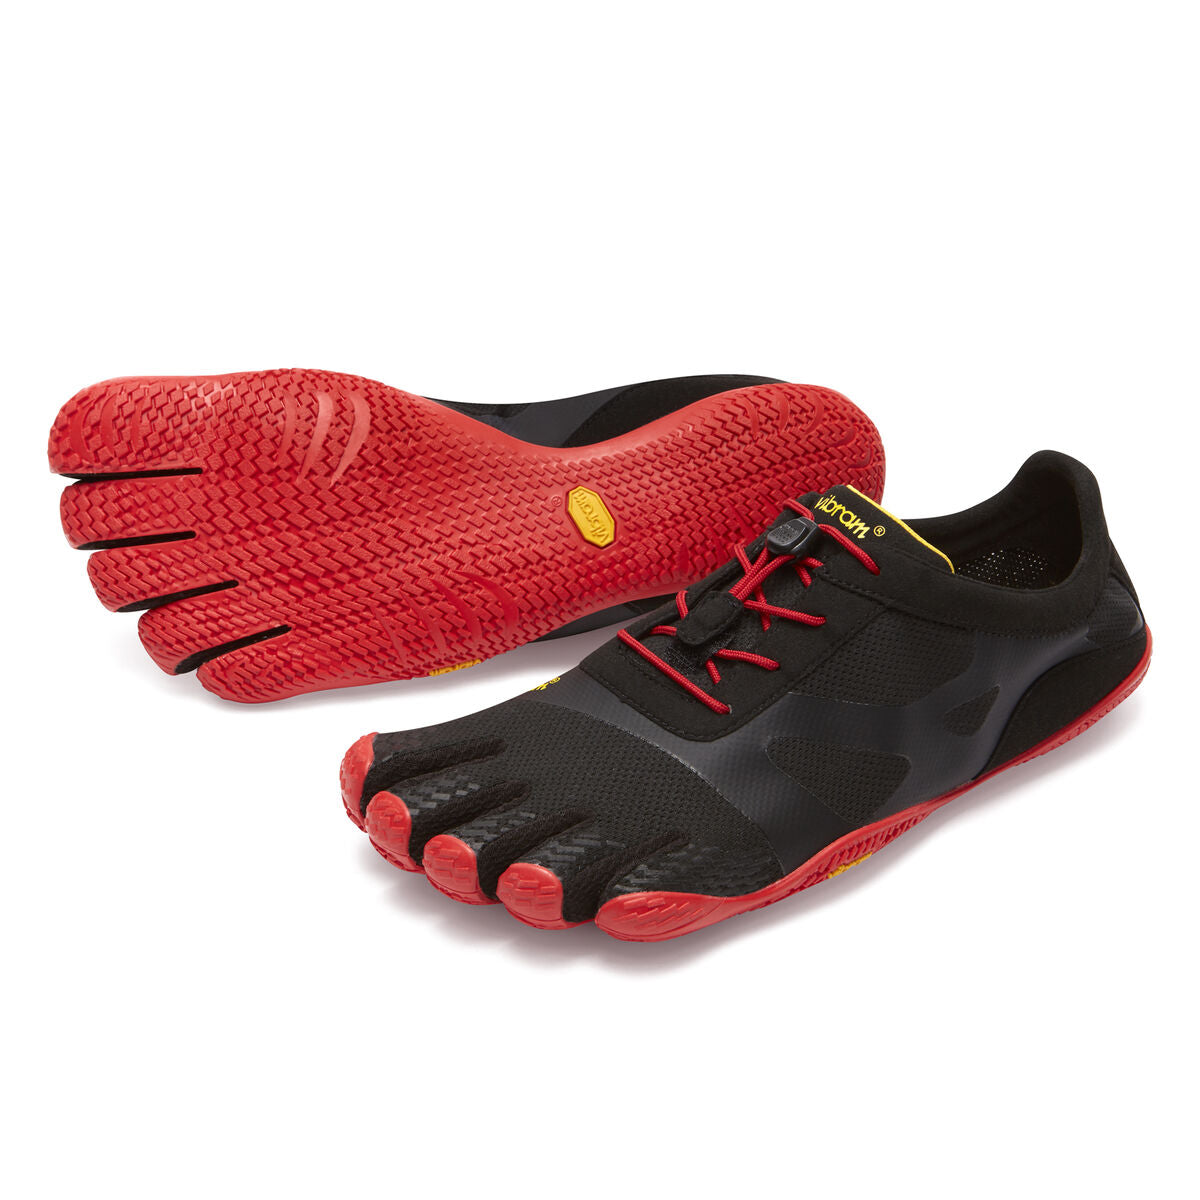 Men's Vibram Five Fingers KSO EVO Training Shoe in Black/Red from the front